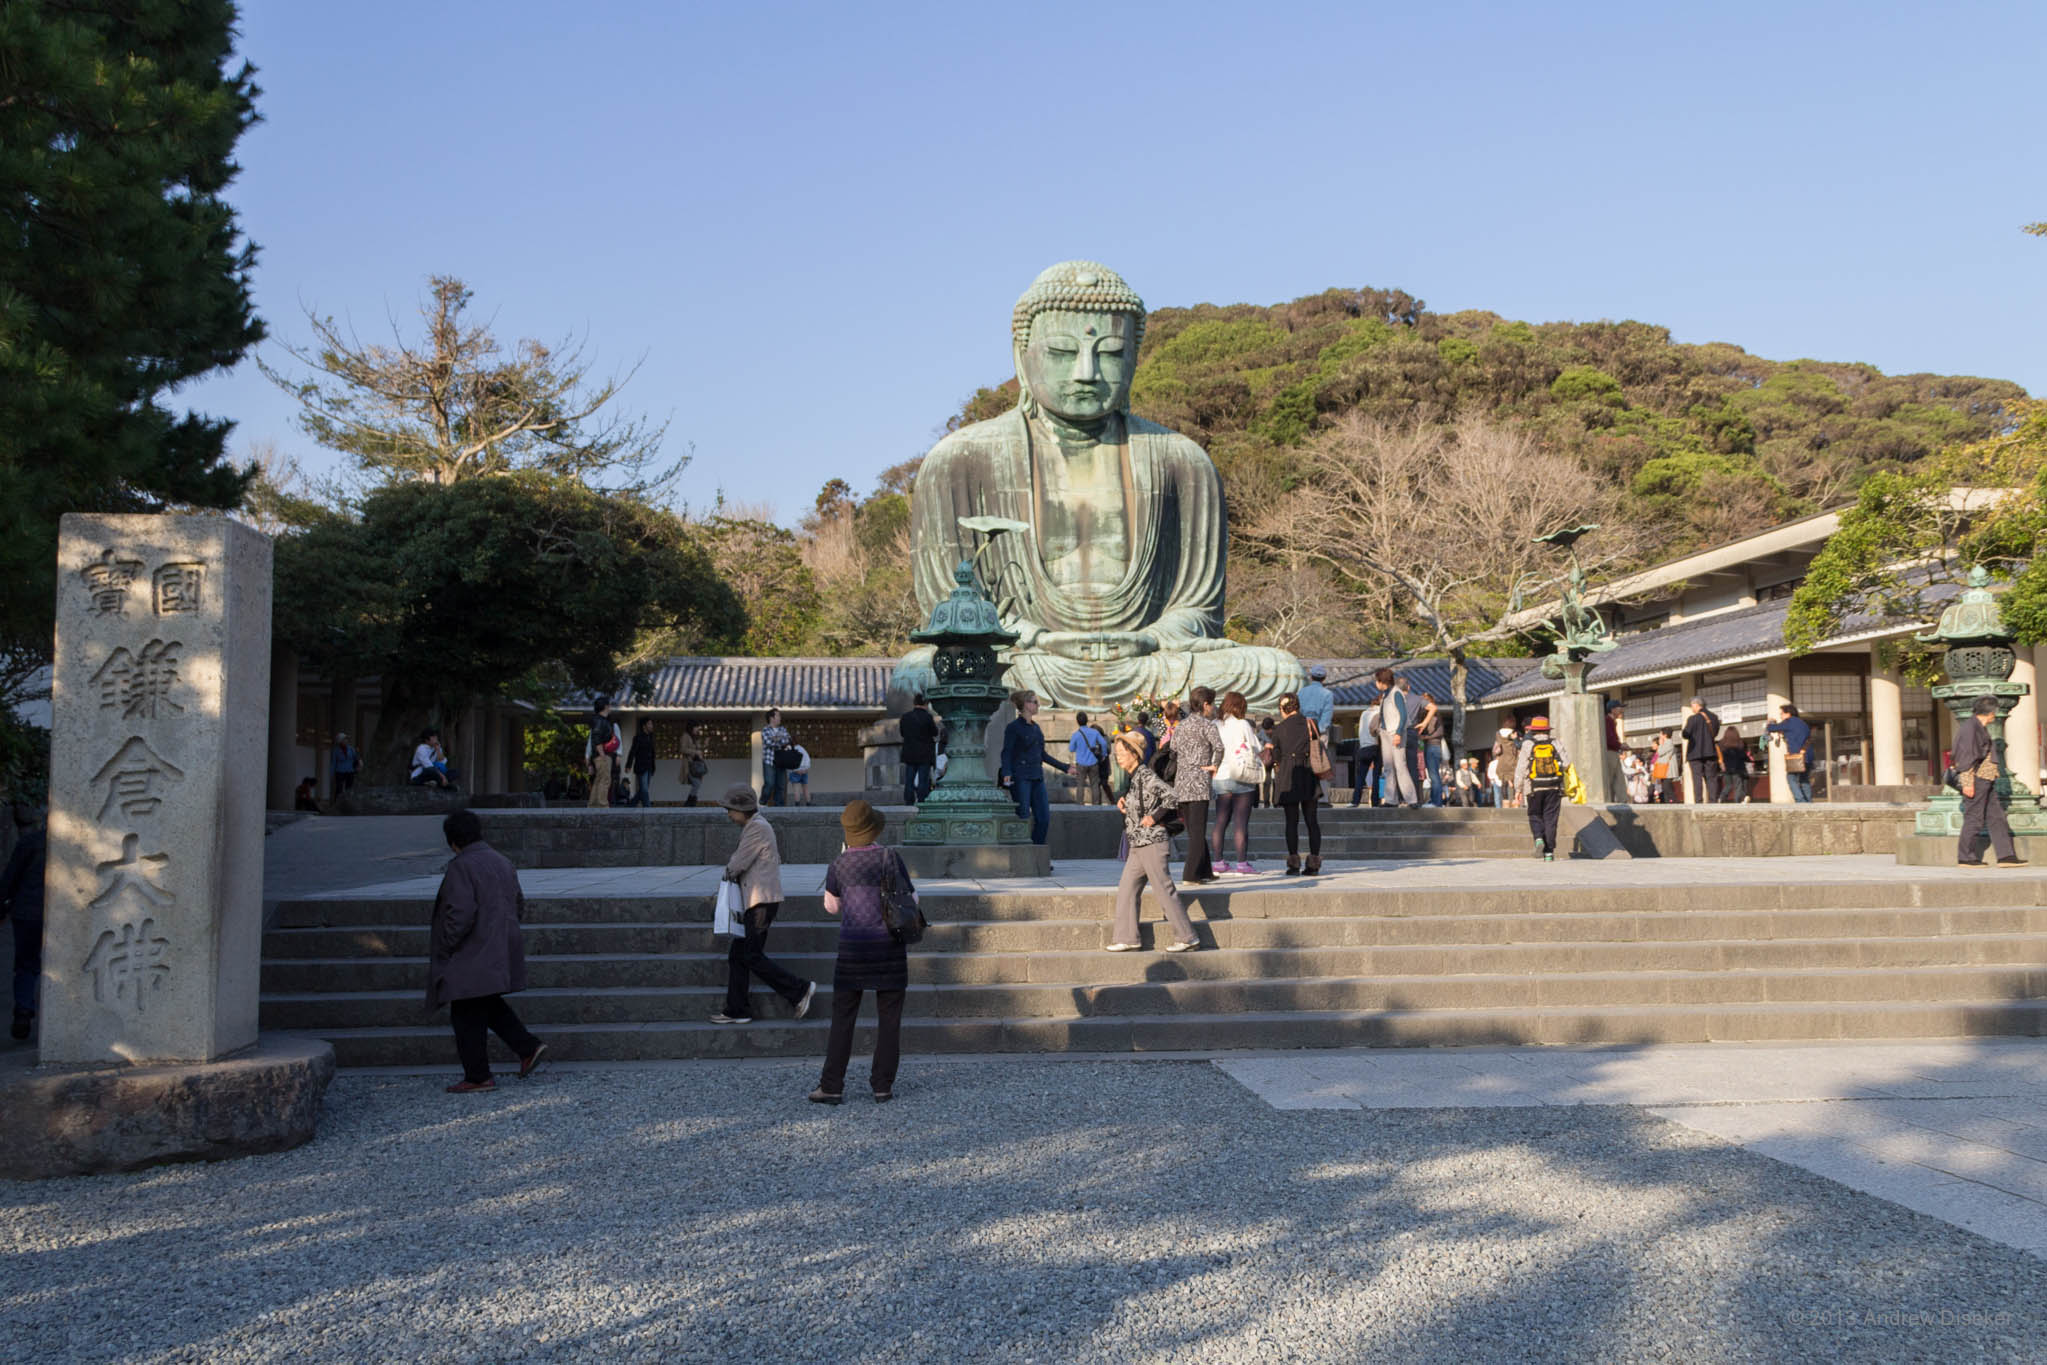 Riding the Enoden pt. 2: Kamakura